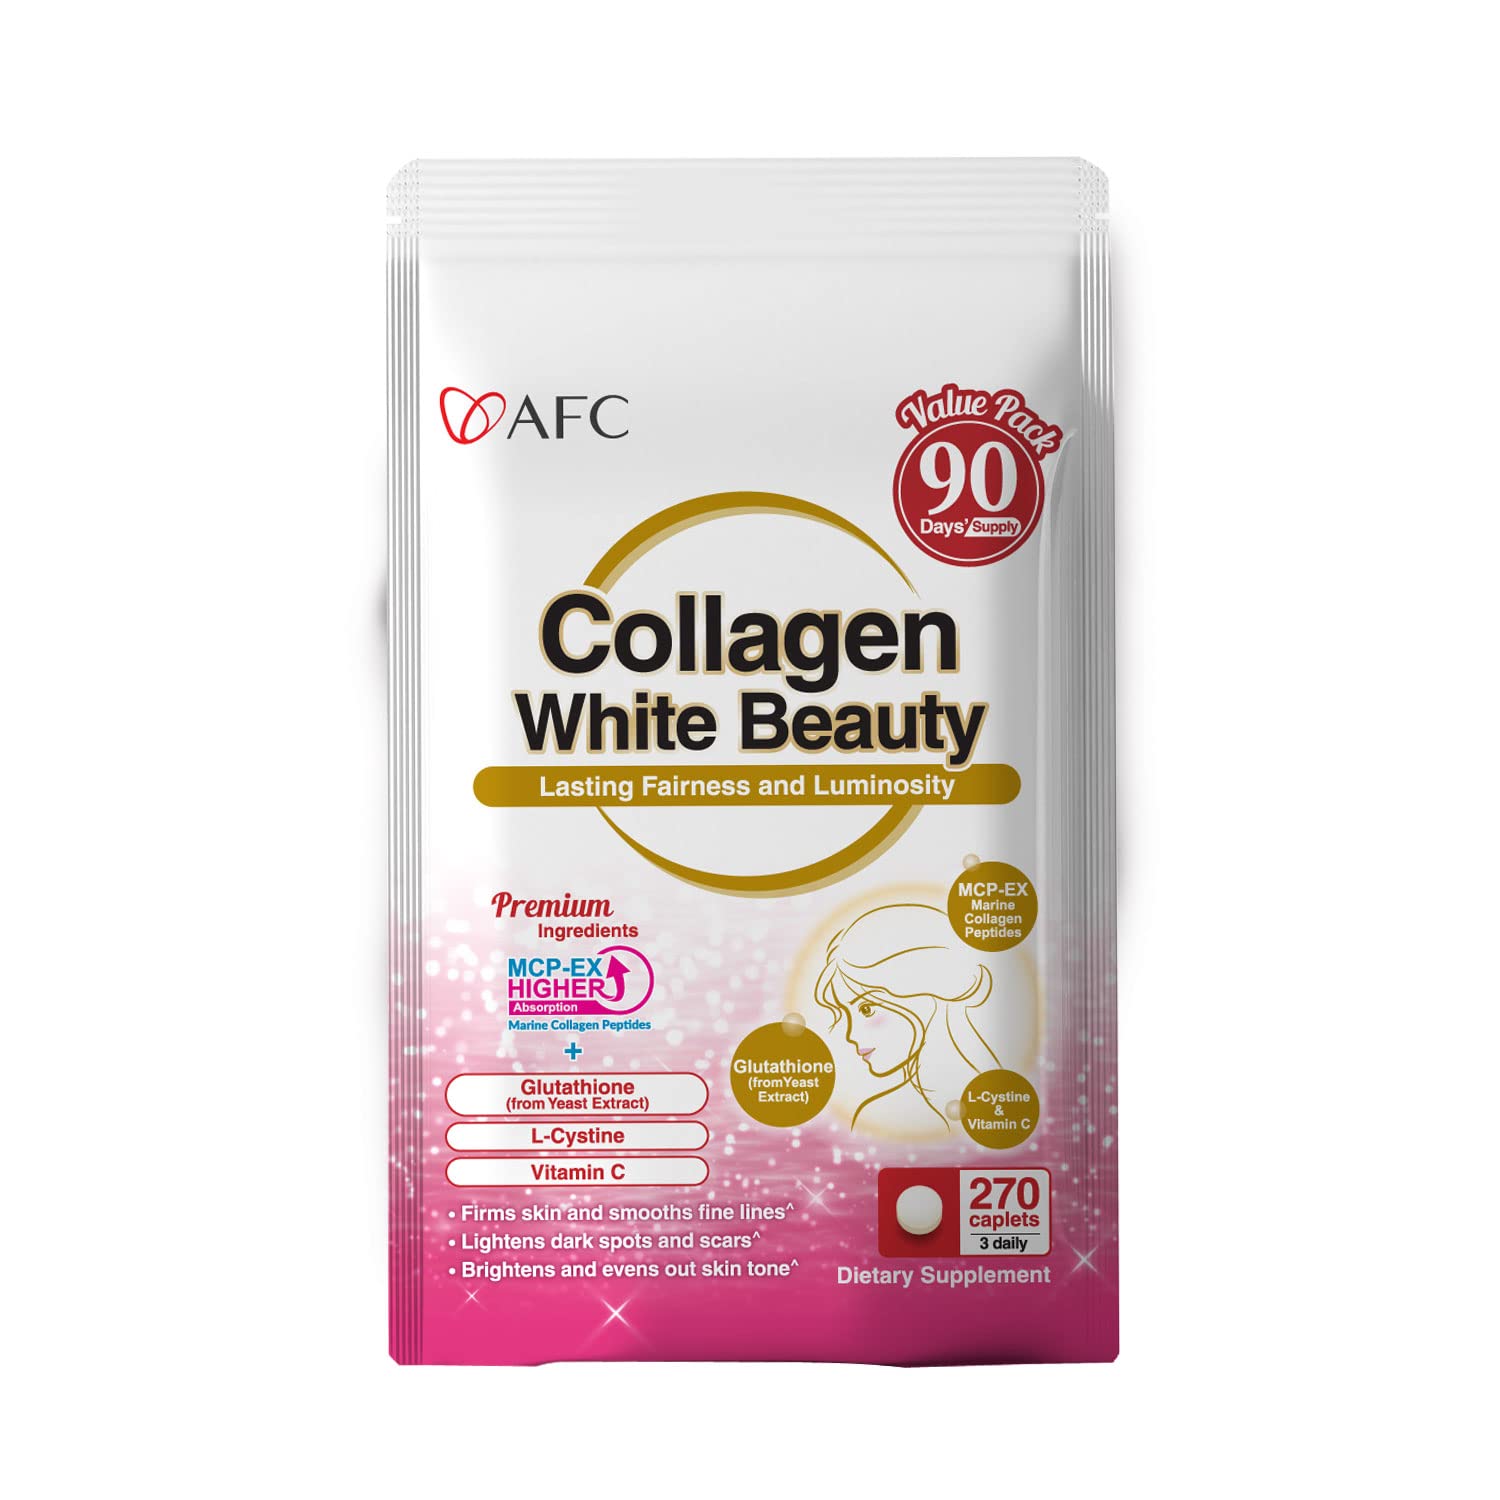 Collagen White Ex phù hợp cho mọi loại da không?
